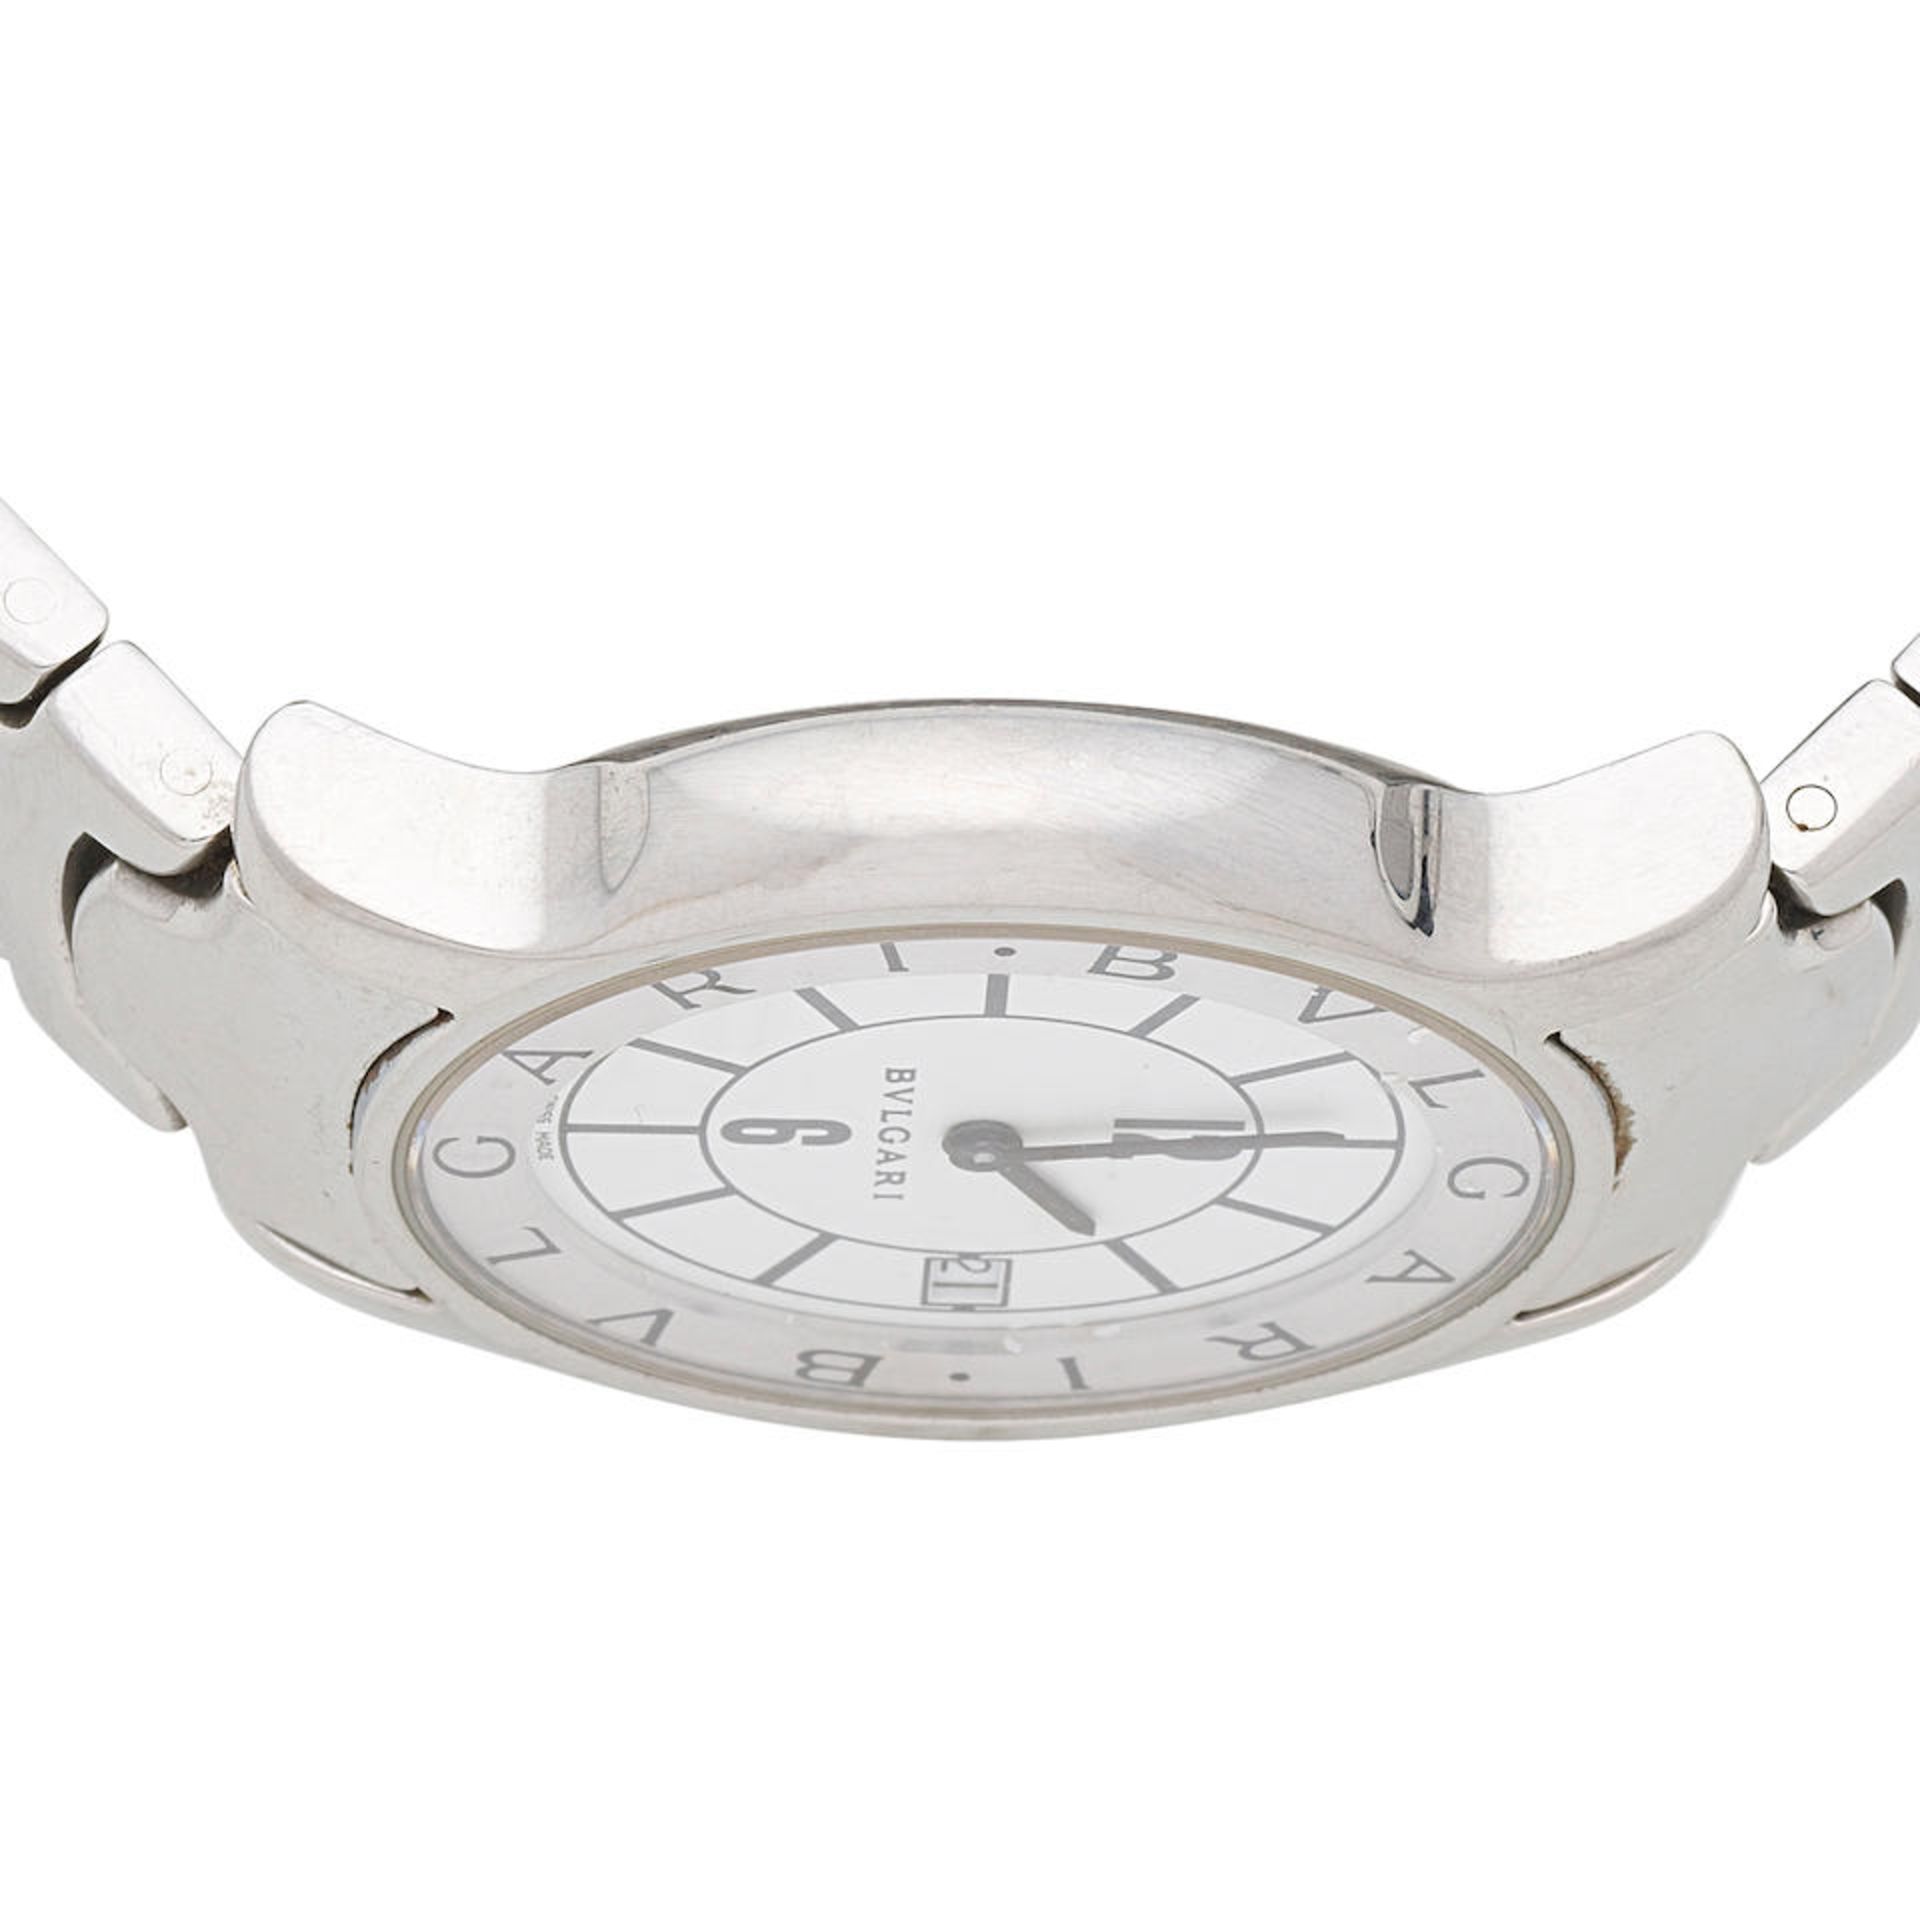 Bulgari. A Limited Edition stainless steel quartz calendar bracelet watch Solotempo, Ref: ST 35... - Bild 2 aus 4